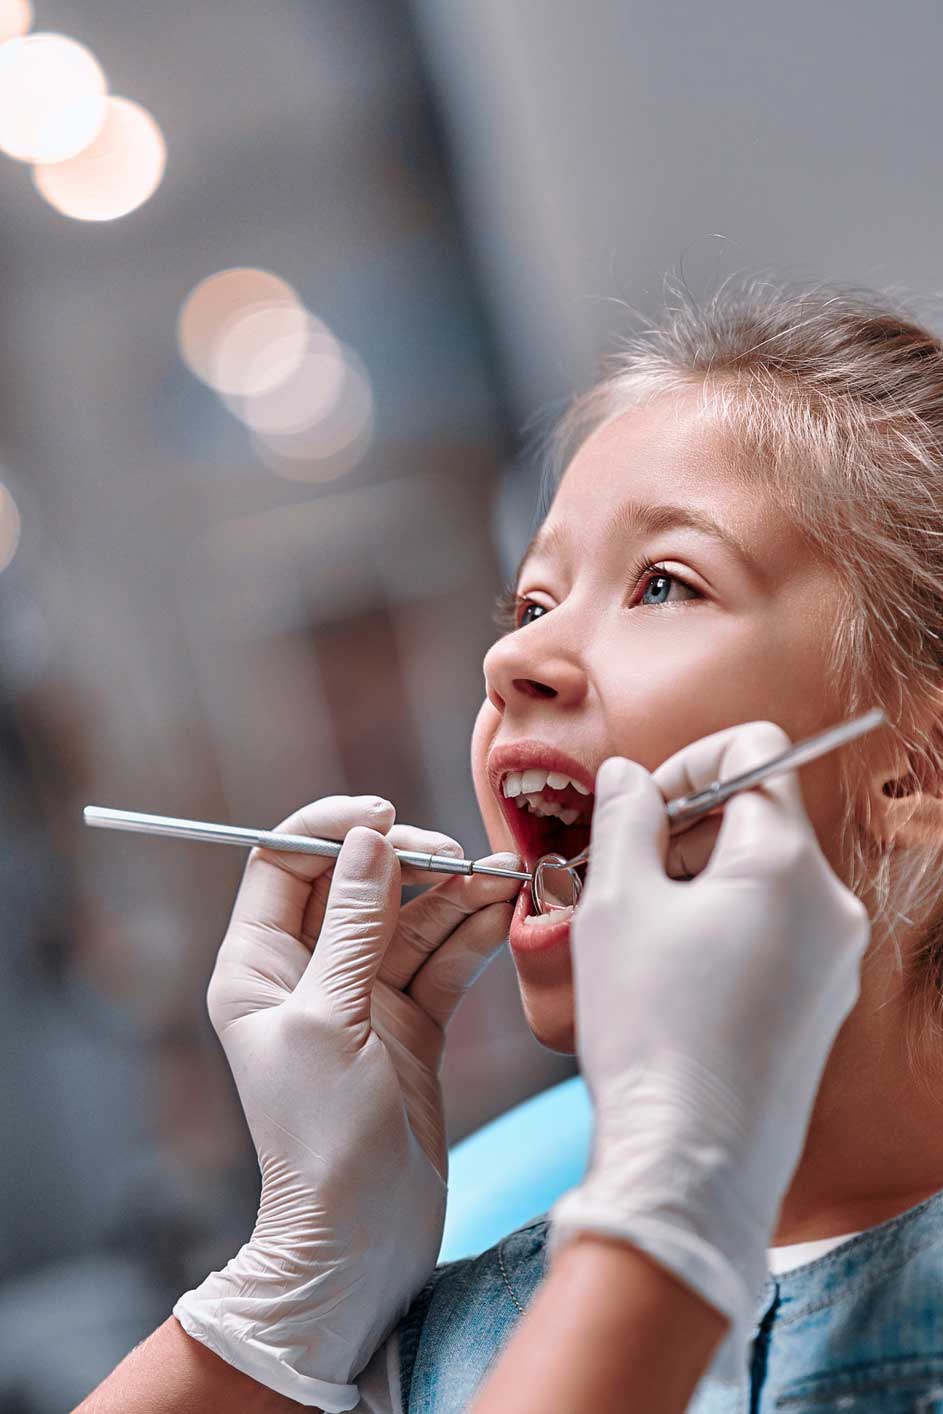 odontología infantil en Viladecans, odontopediatría en Viladecans